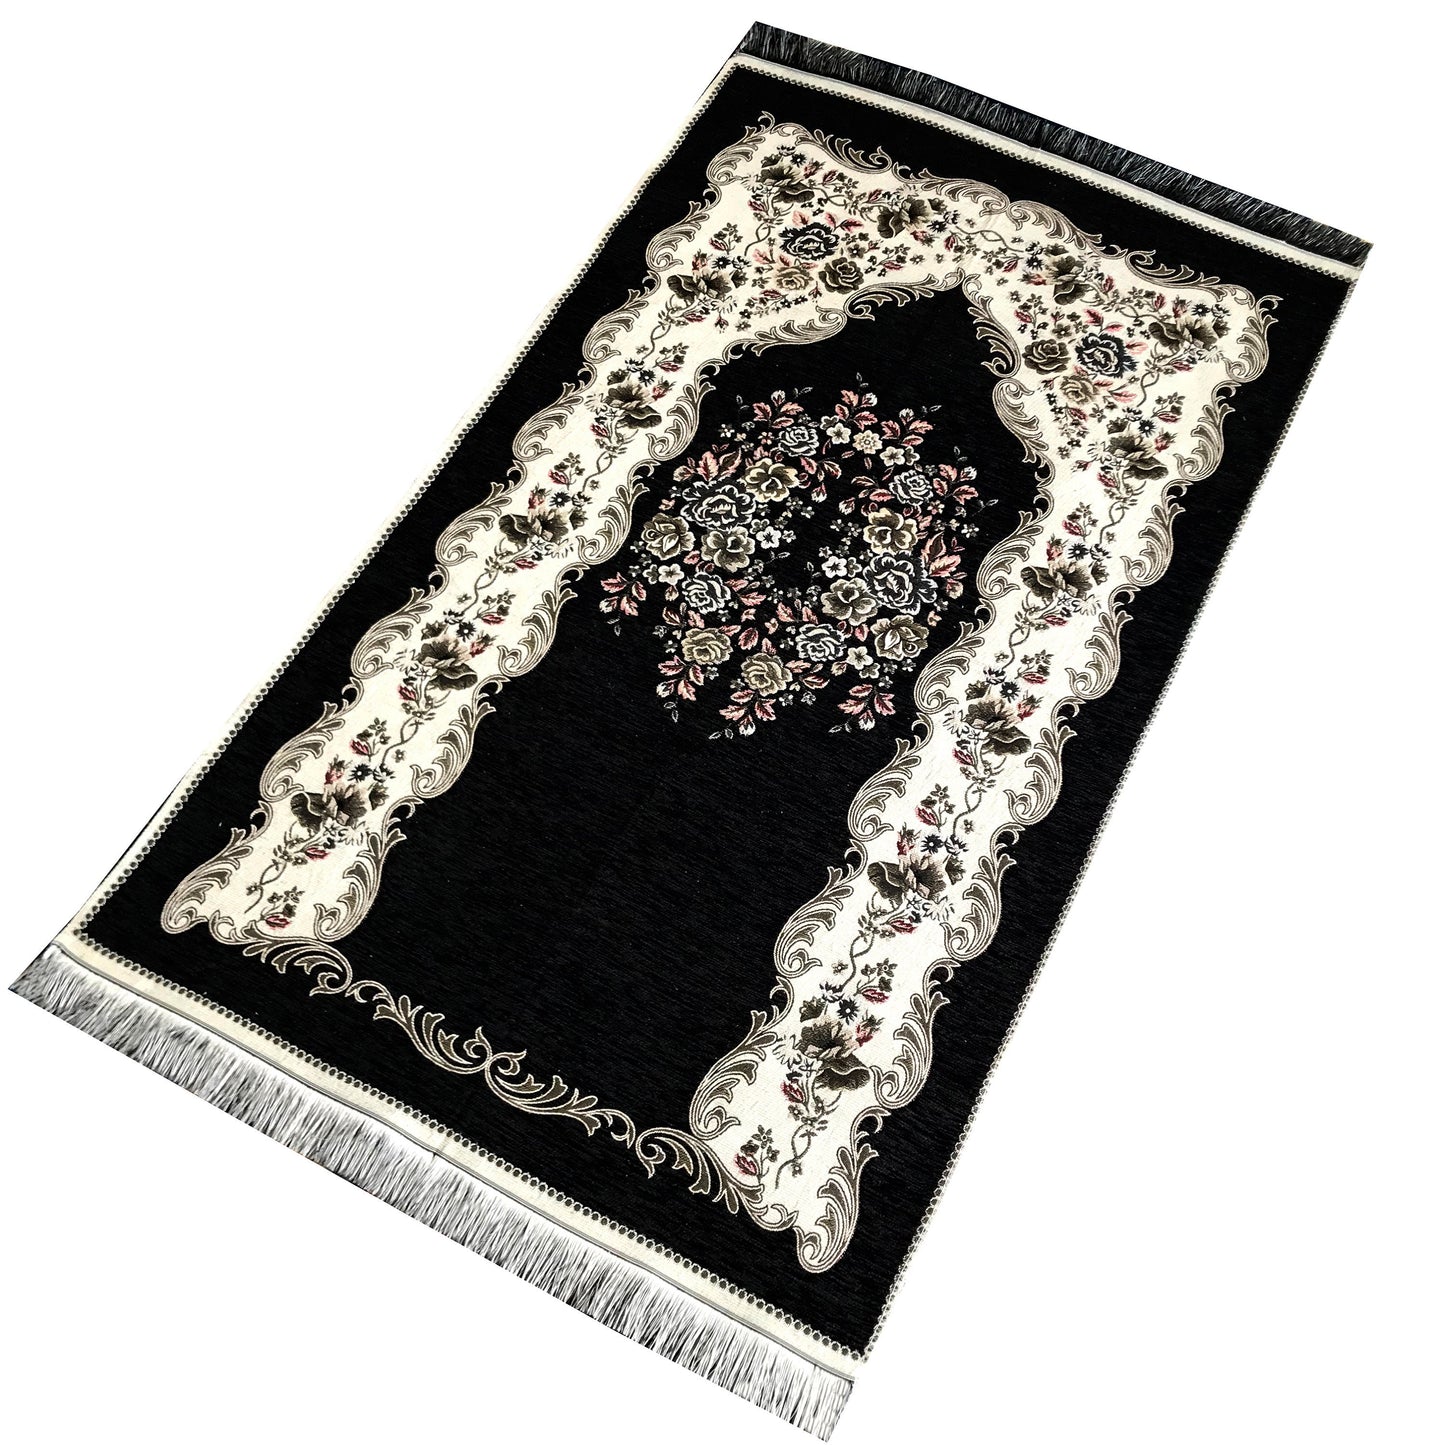 Chenille Floral Portable Prayer Rug